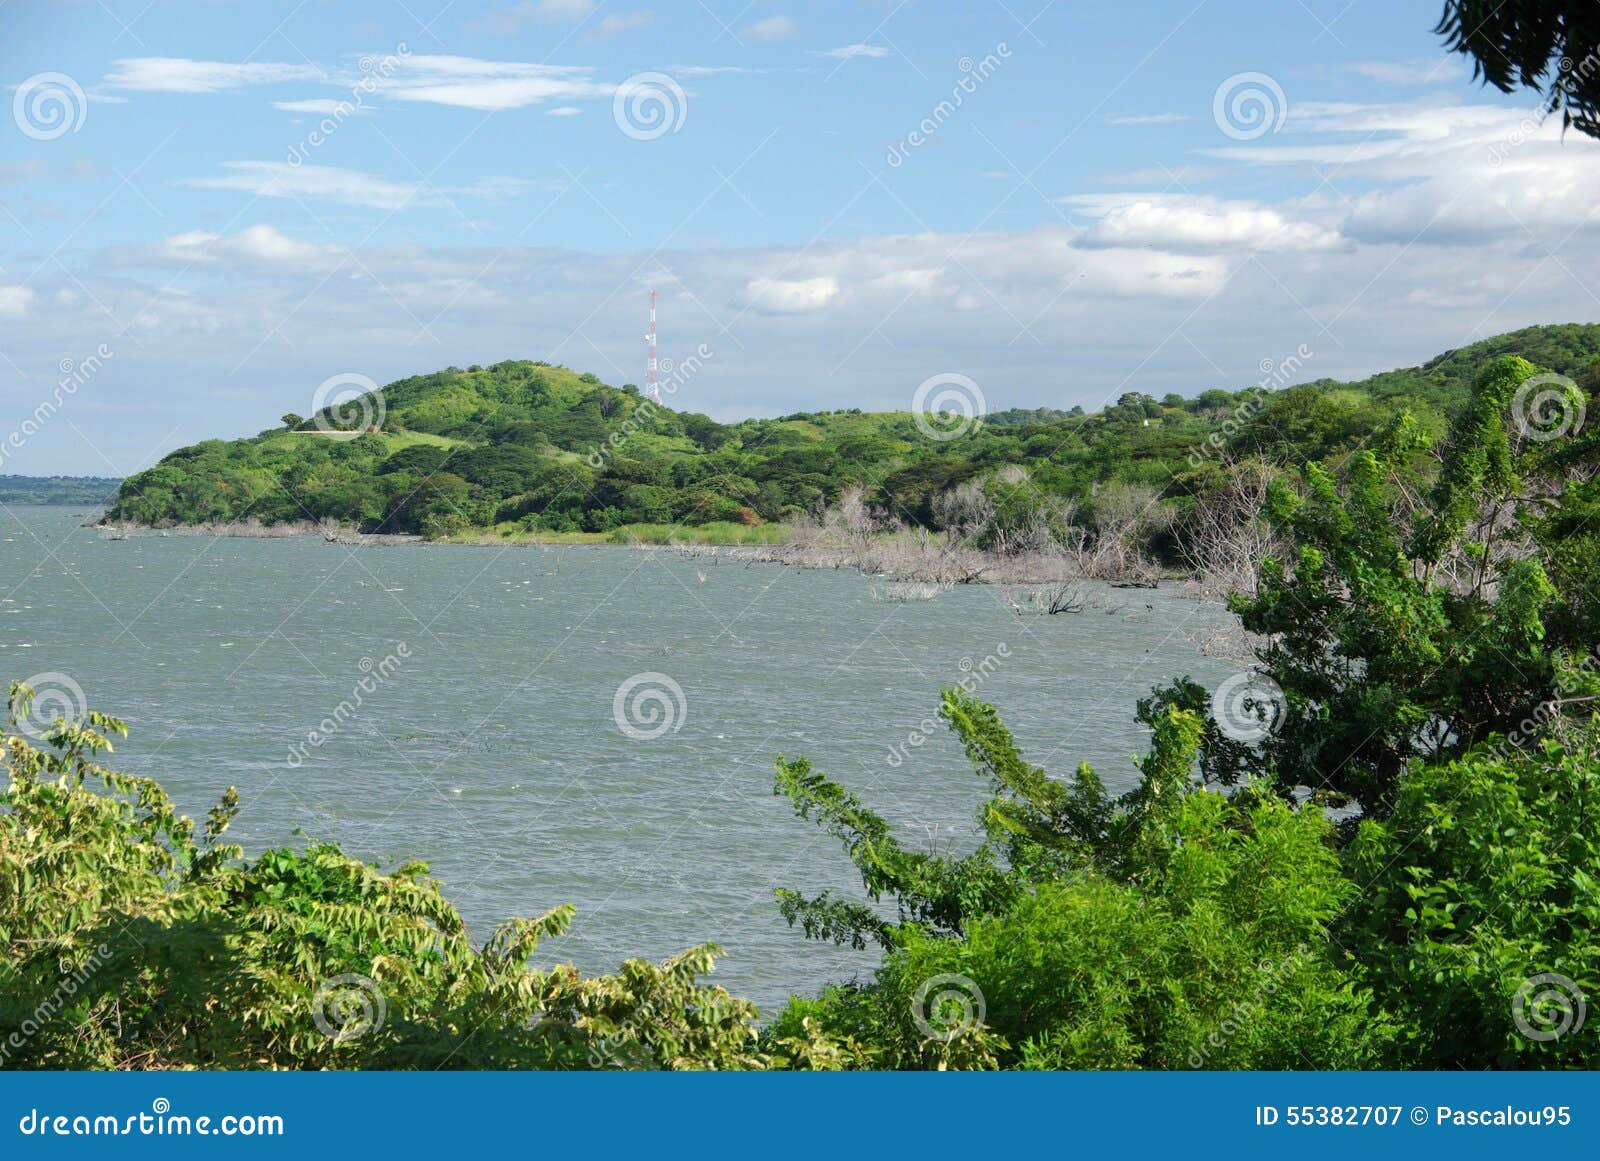 Landscape in Nicaragua stock image. Image of travel, mangrove - 55382707